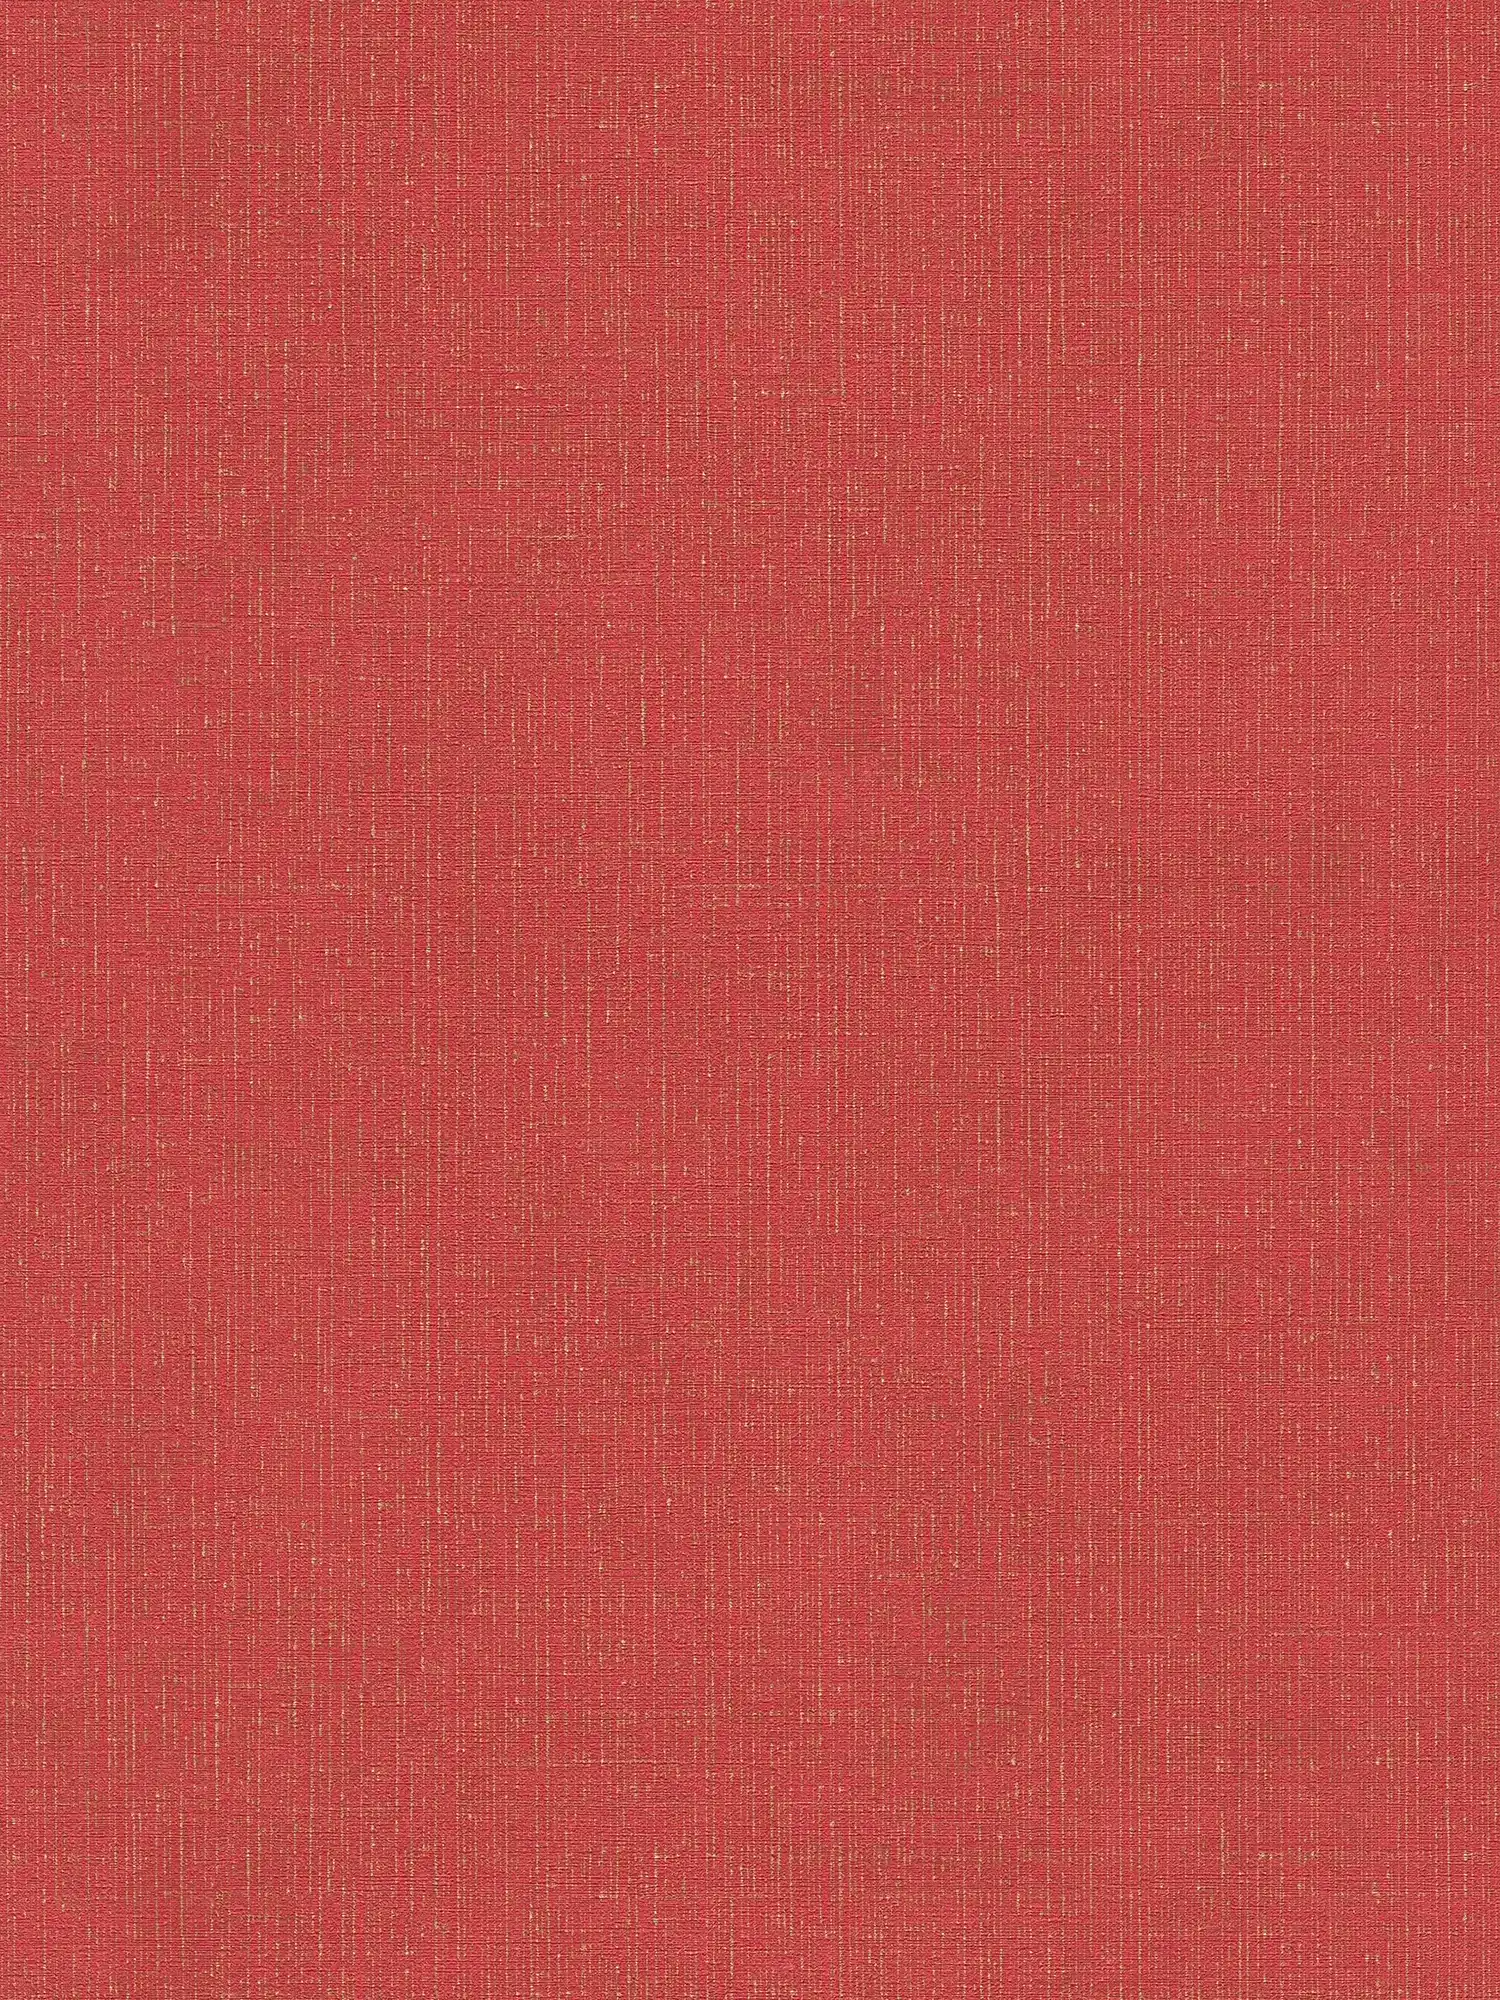 Papel pintado rojo moteado de oro con óptica textil - metálico, rojo
